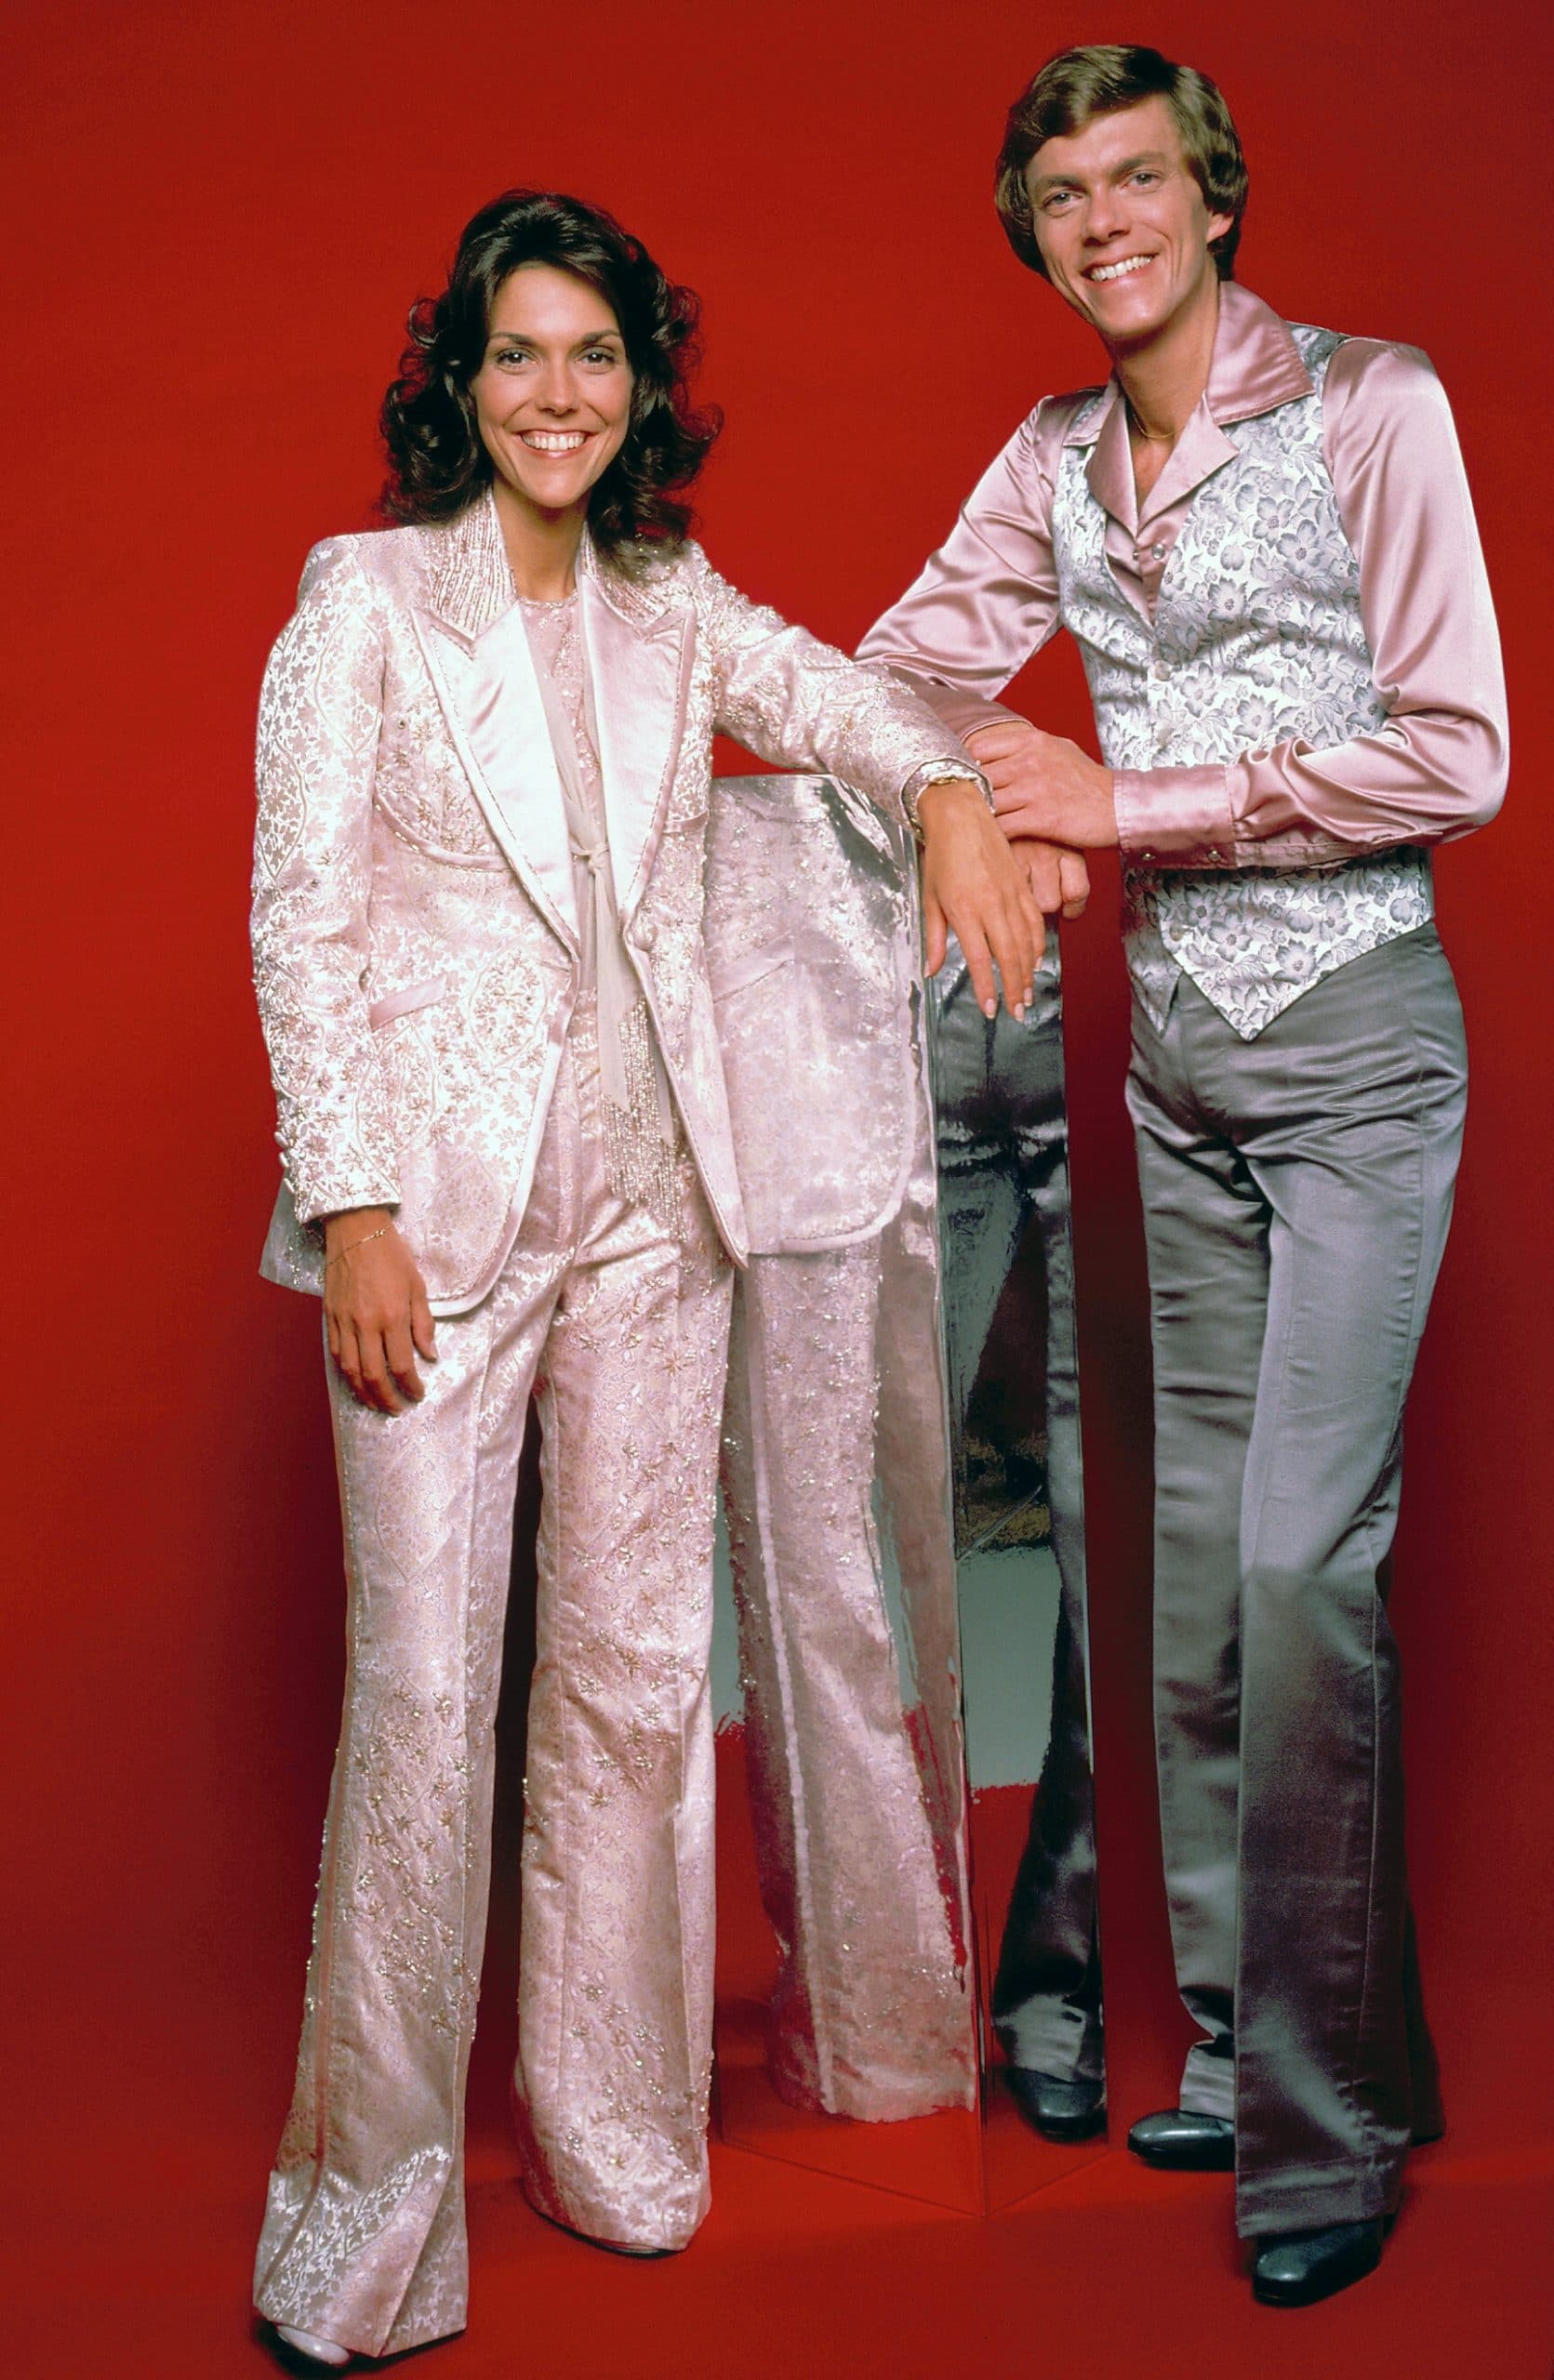 The Carpenters, Karen and Richard Carpenter, 1970s